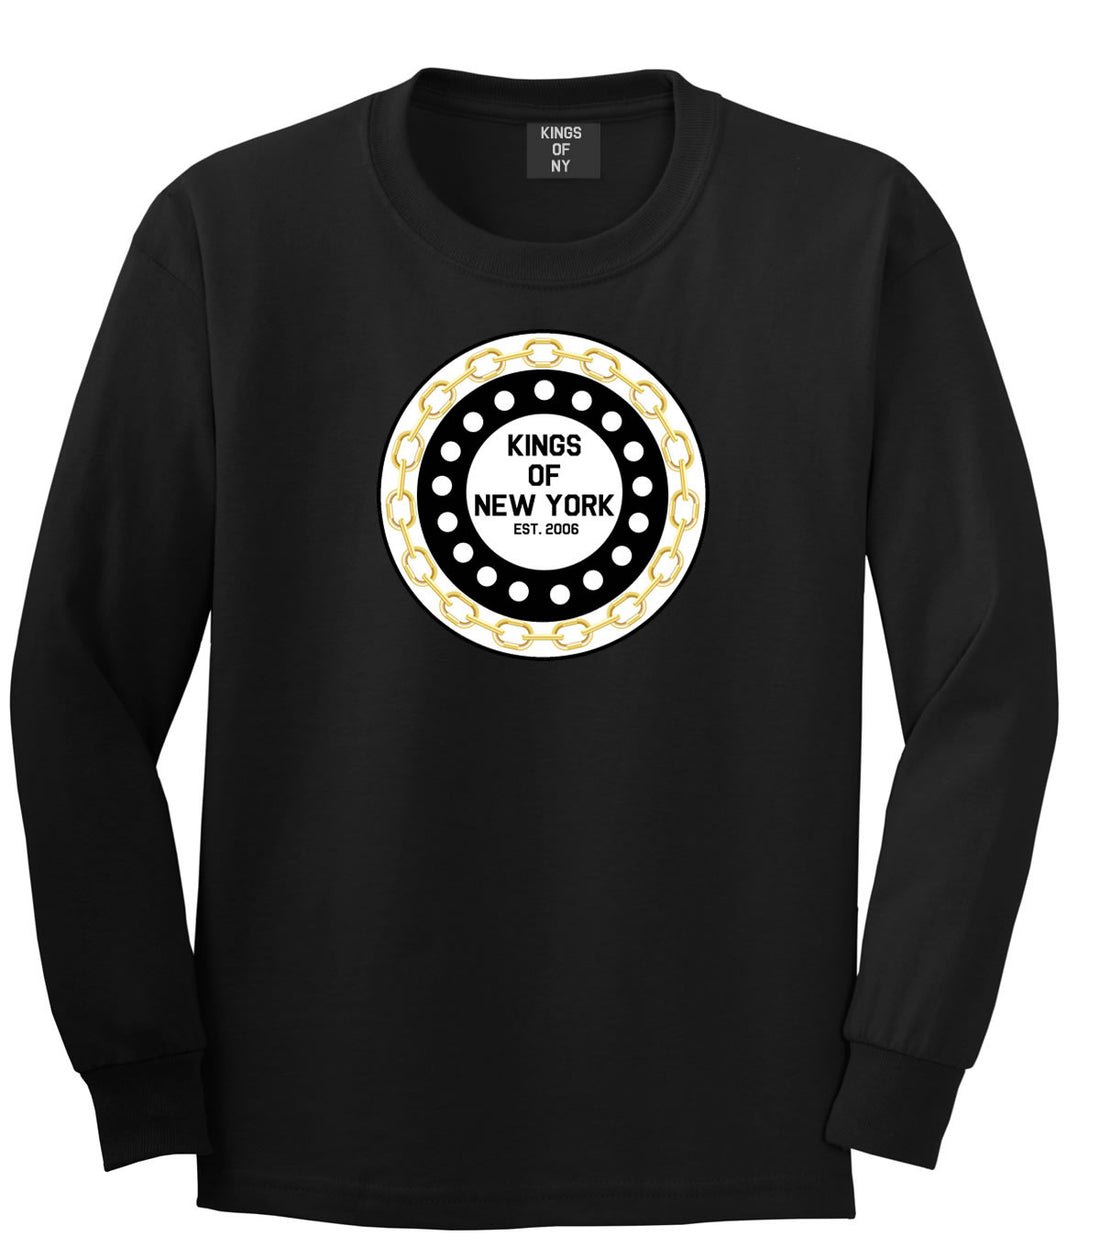 Chain Logo New York Brooklyn Bronx Long Sleeve Boys Kids T-Shirt In Black by Kings Of NY